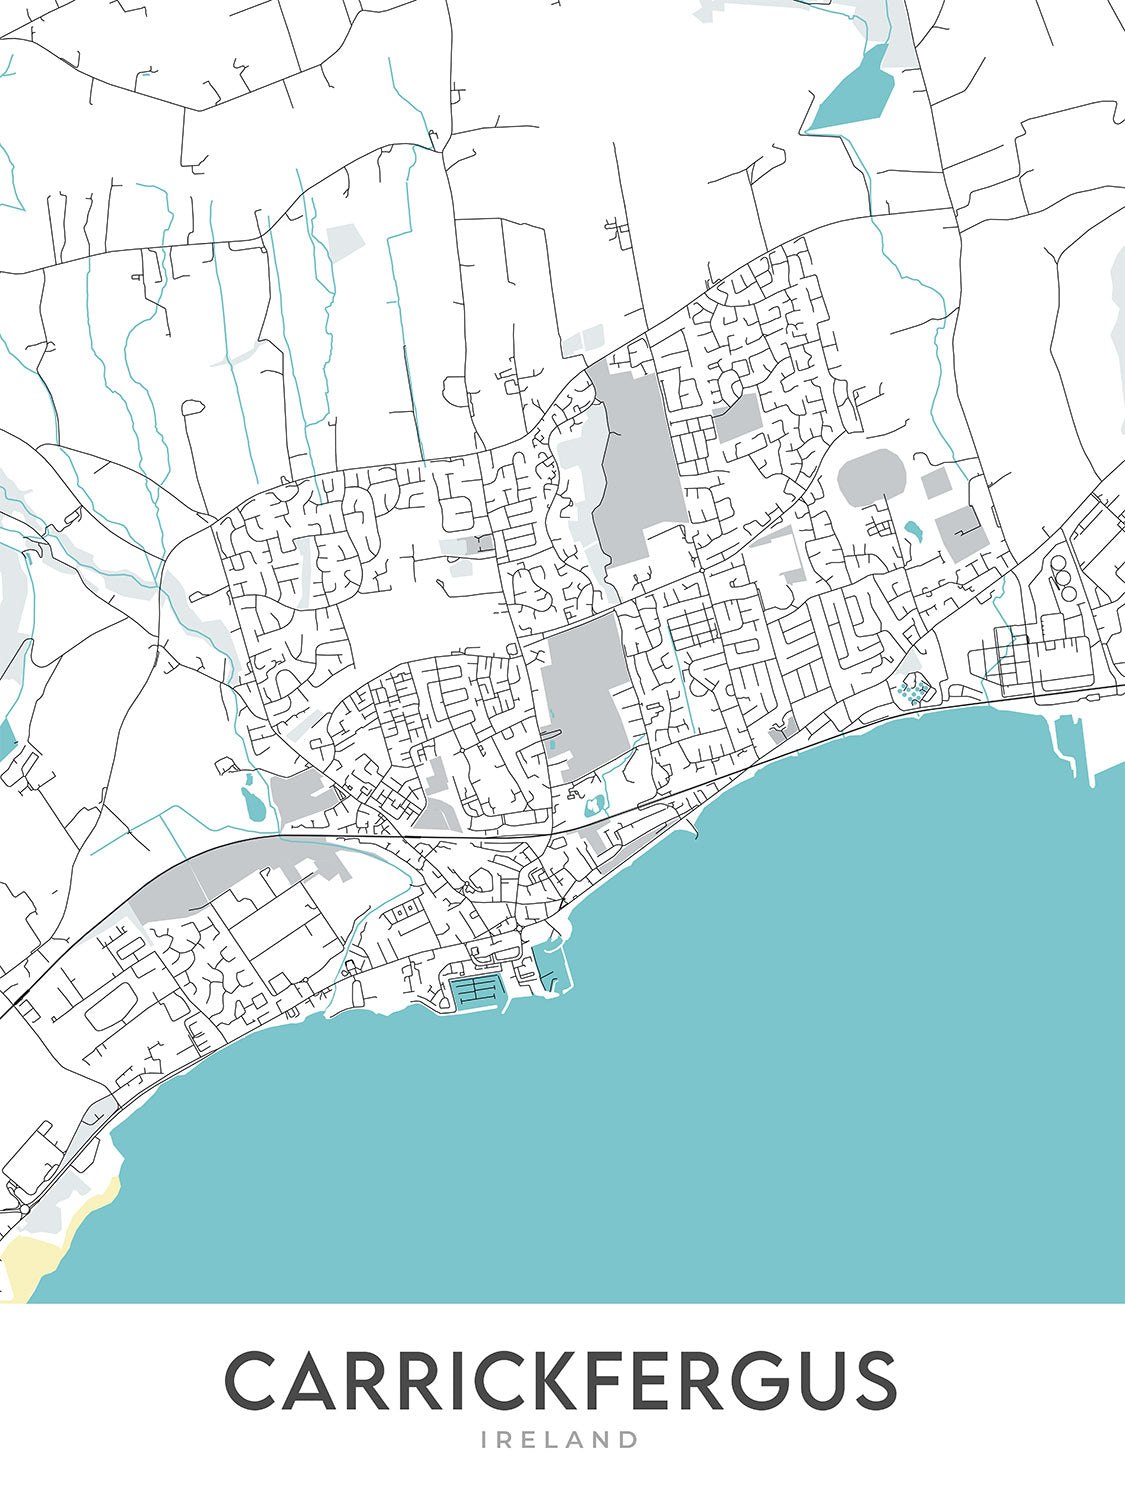 Plan de la ville moderne de Carrickfergus, Irlande du Nord : Château de Carrickfergus, Belfast Lough, A2, Eden, Woodburn